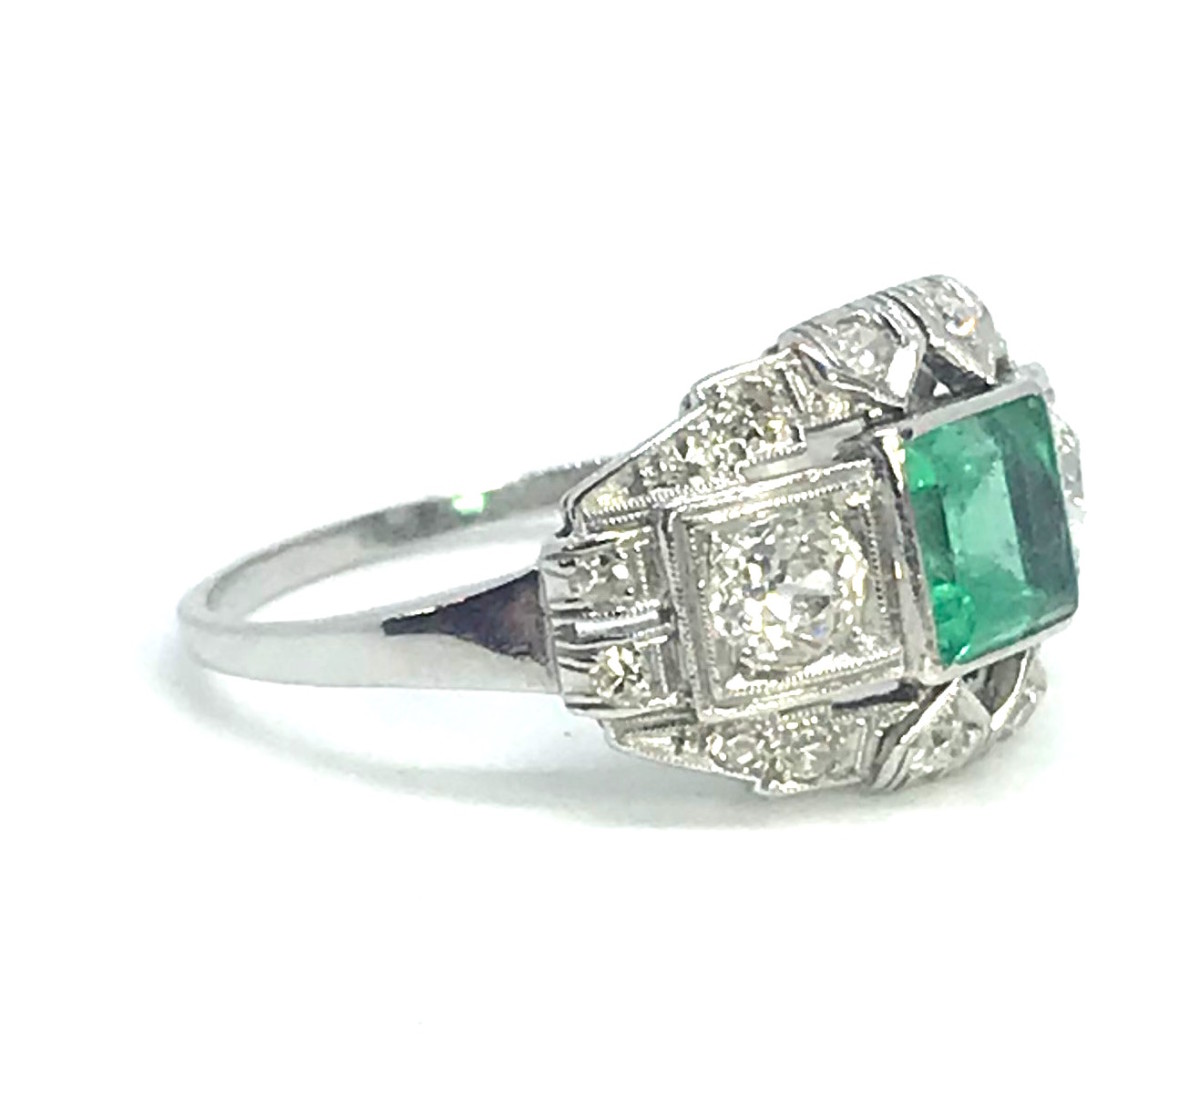 Antique Art Deco Emerald & Diamond Ring - Jewellery Discovery